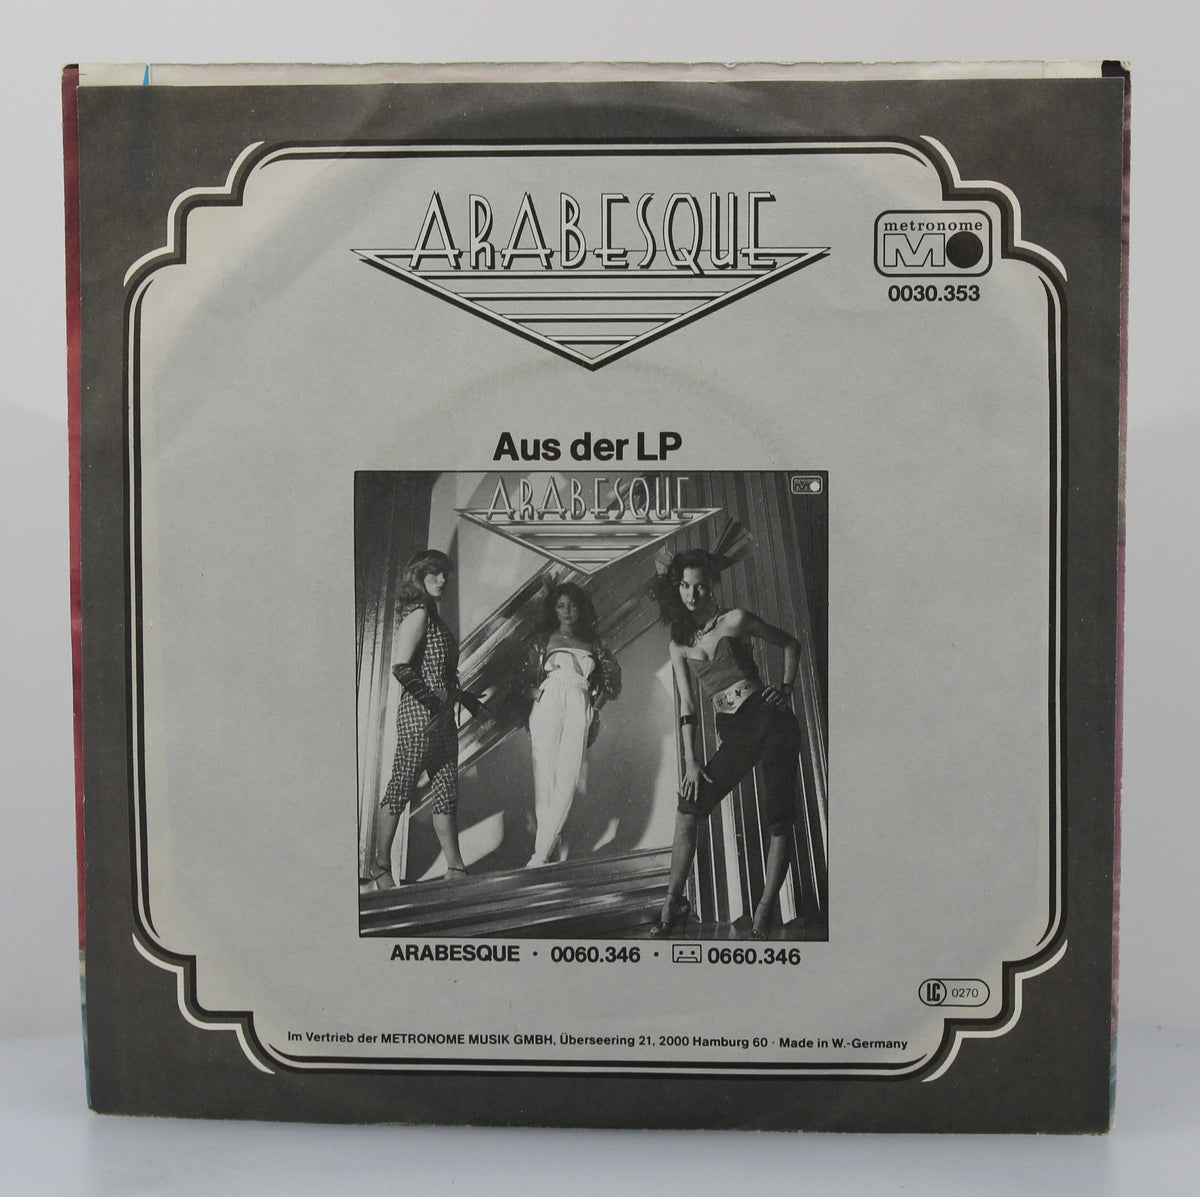 Arabesque (Sandra) – Marigot Bay, Vinyl, 7&quot;, 45 RPM, Single, Stereo, Germany 1980